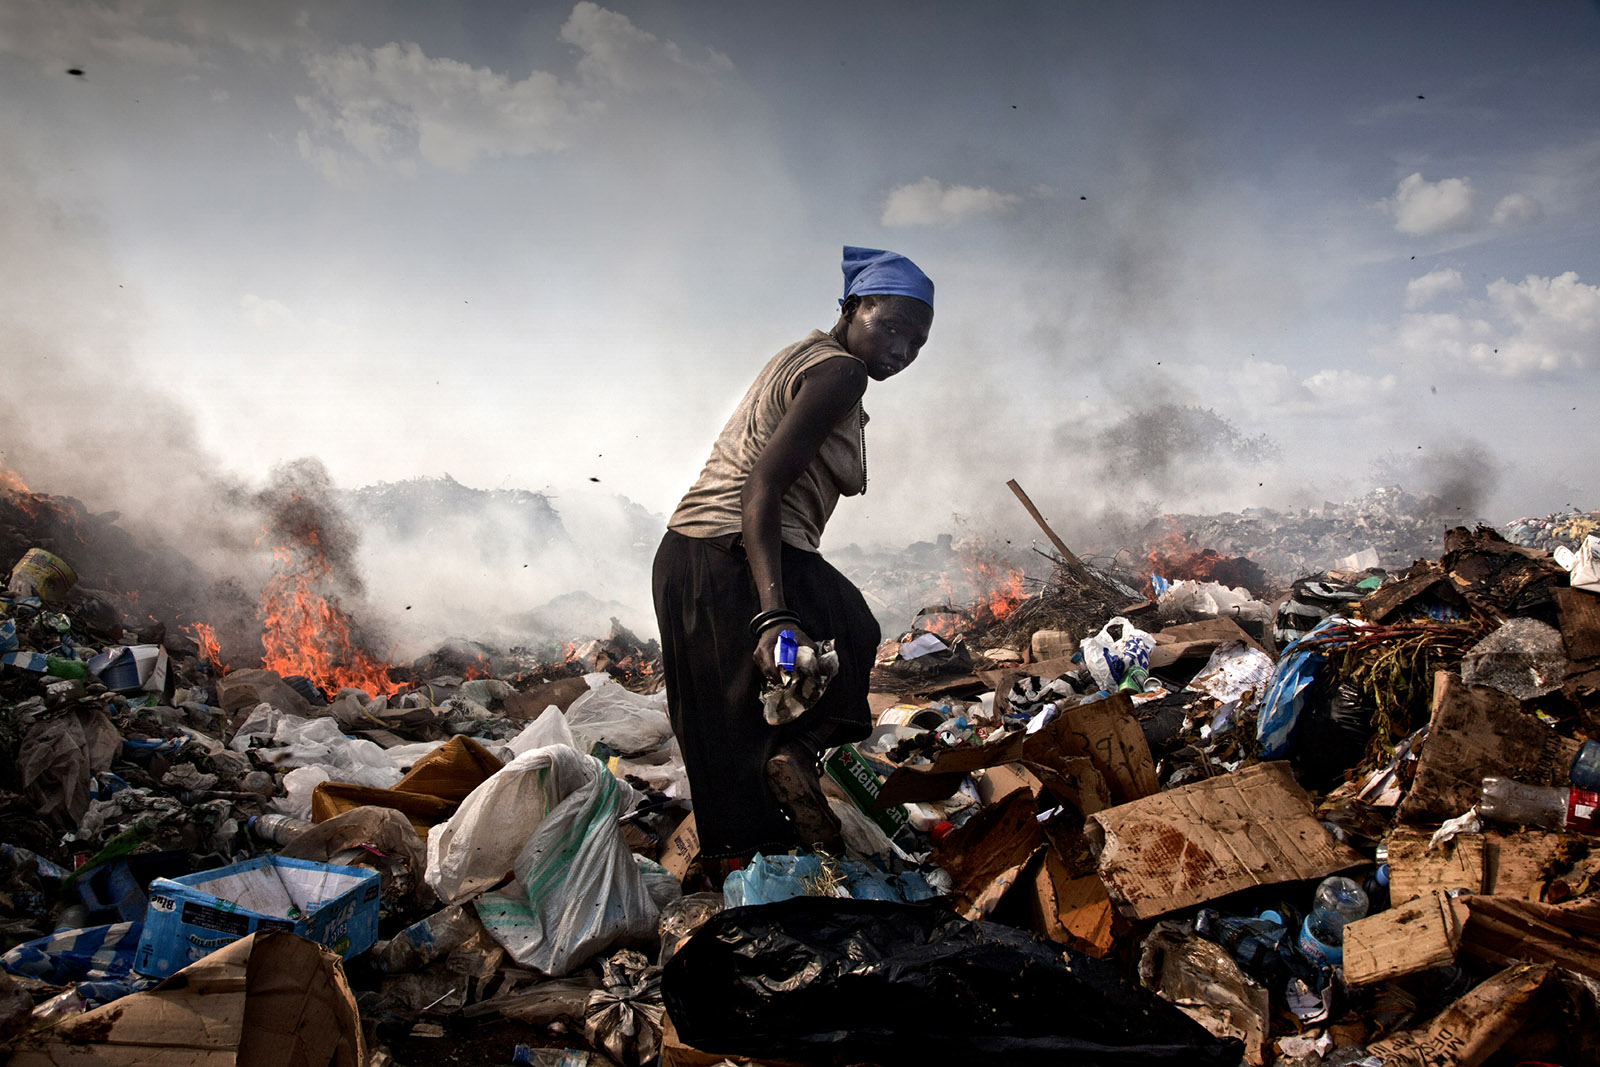 A woman walking through the landfill where she lives, Juba, South Sudan, 2010